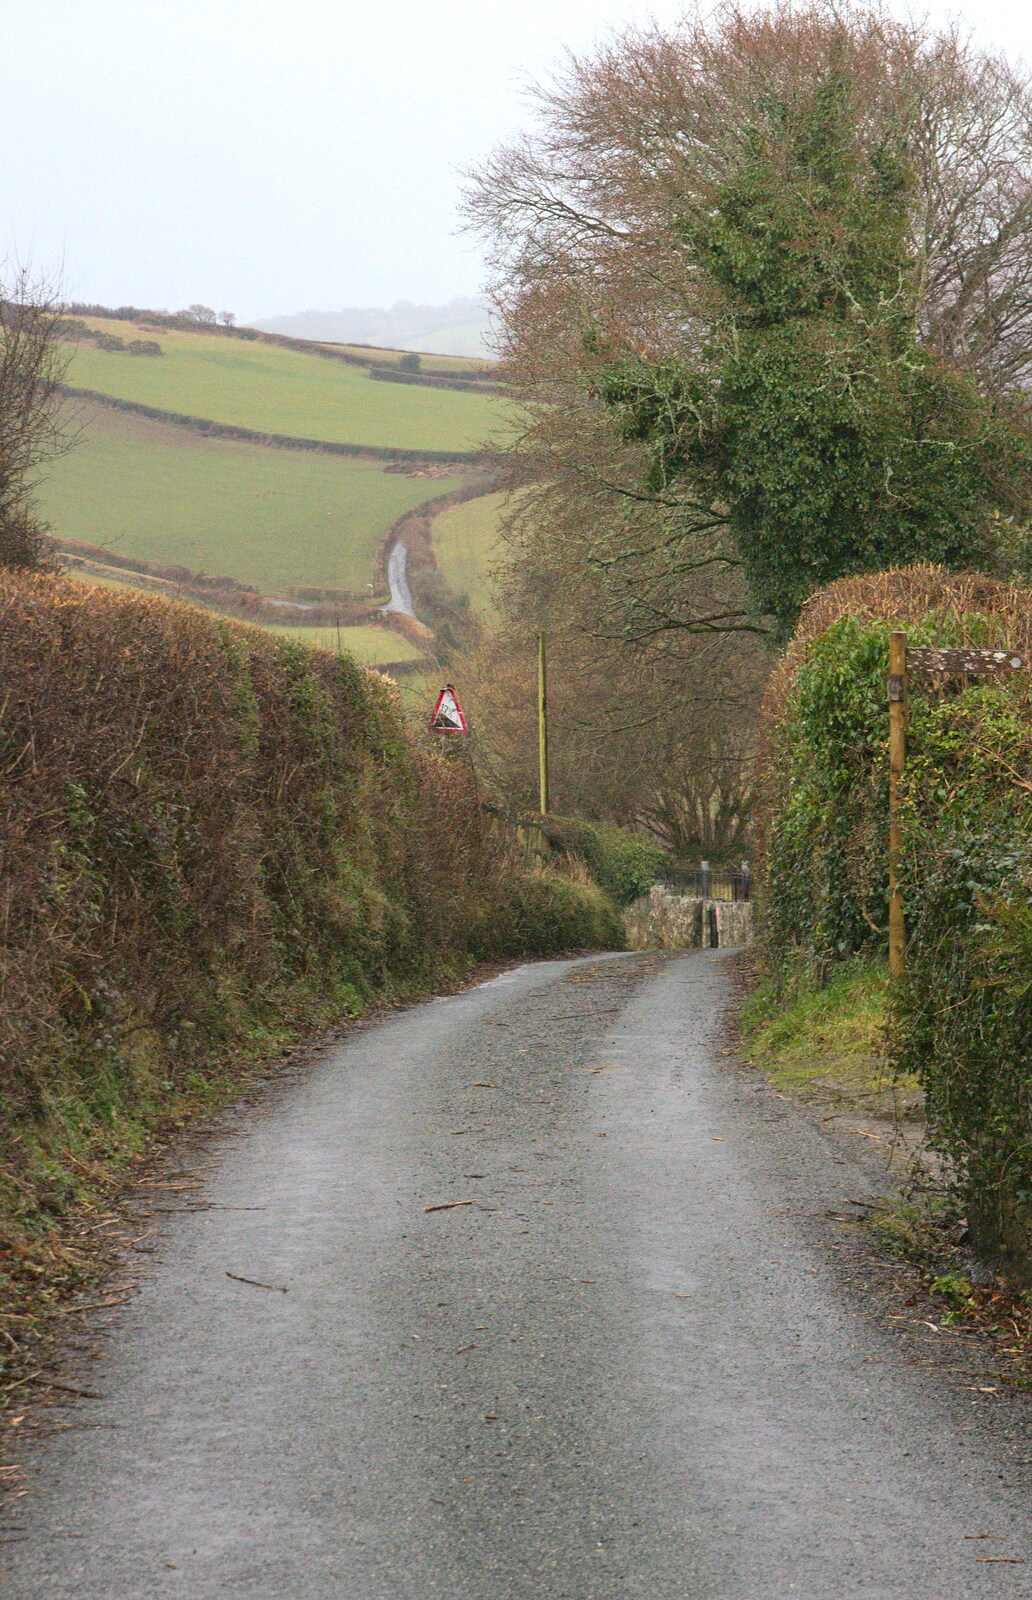 A deep Devon lane from A Trip to Grandma J's, Spreyton, Devon - 18th February 2015